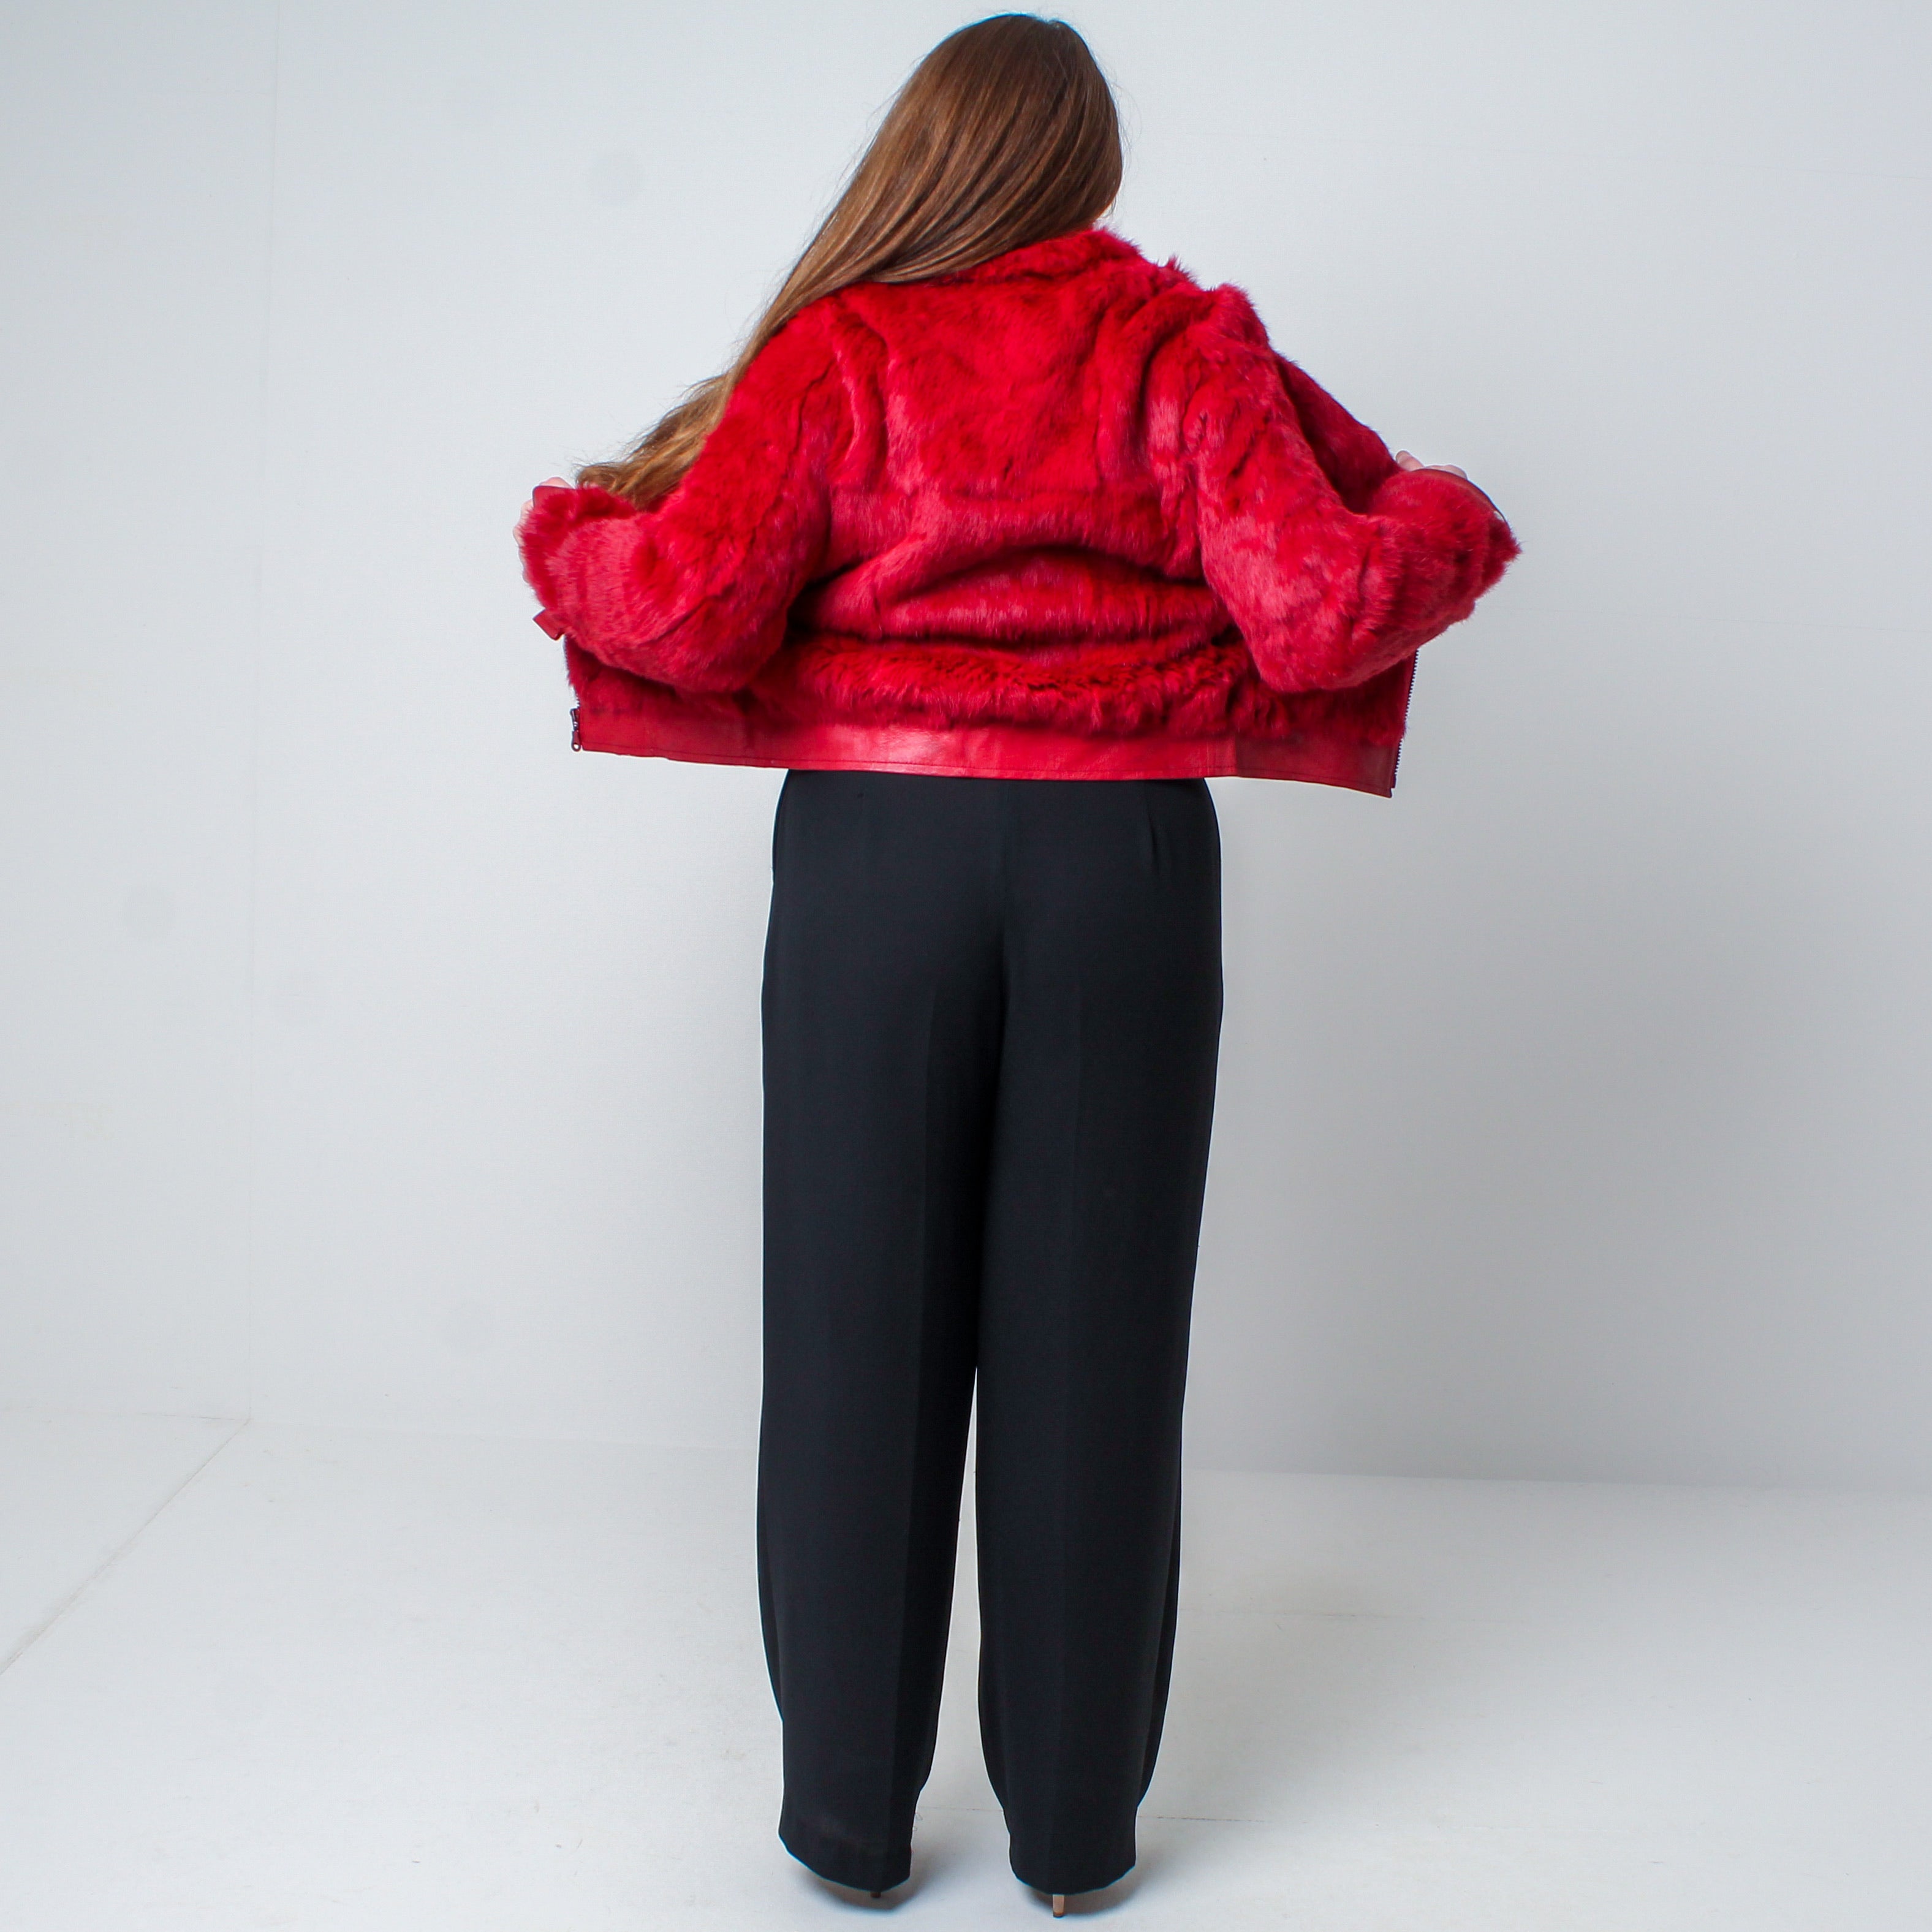 Women’s Vintage Real Red Dyed Rabbit Fur Coat Size: Small-Medium UK 8-12